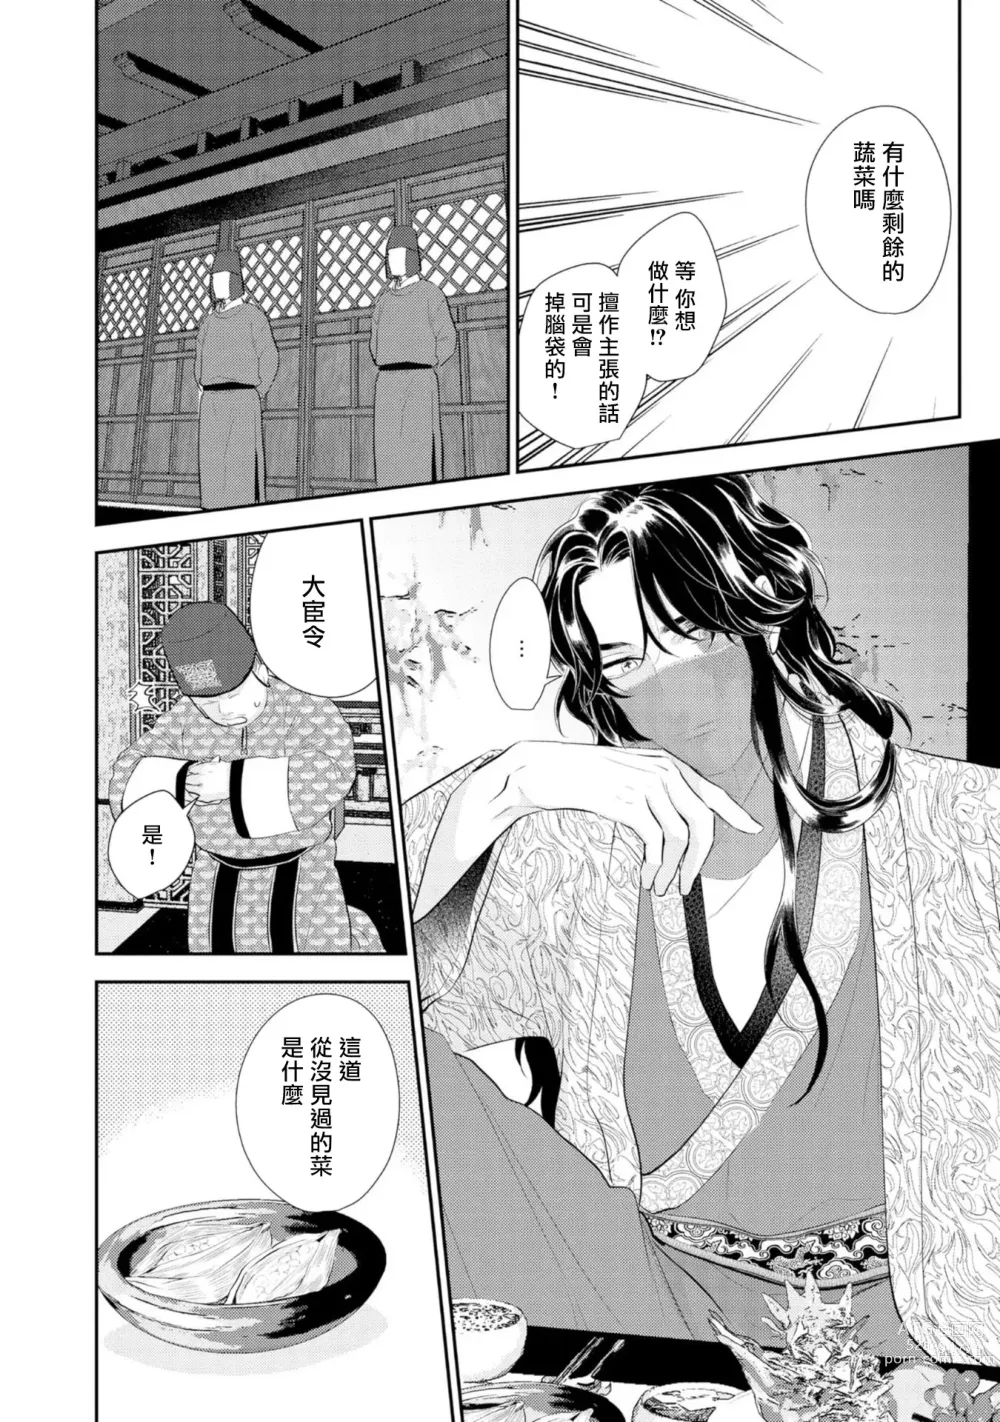 Page 6 of manga 孤高的王与侍寝者之间的情爱 Ch. 3